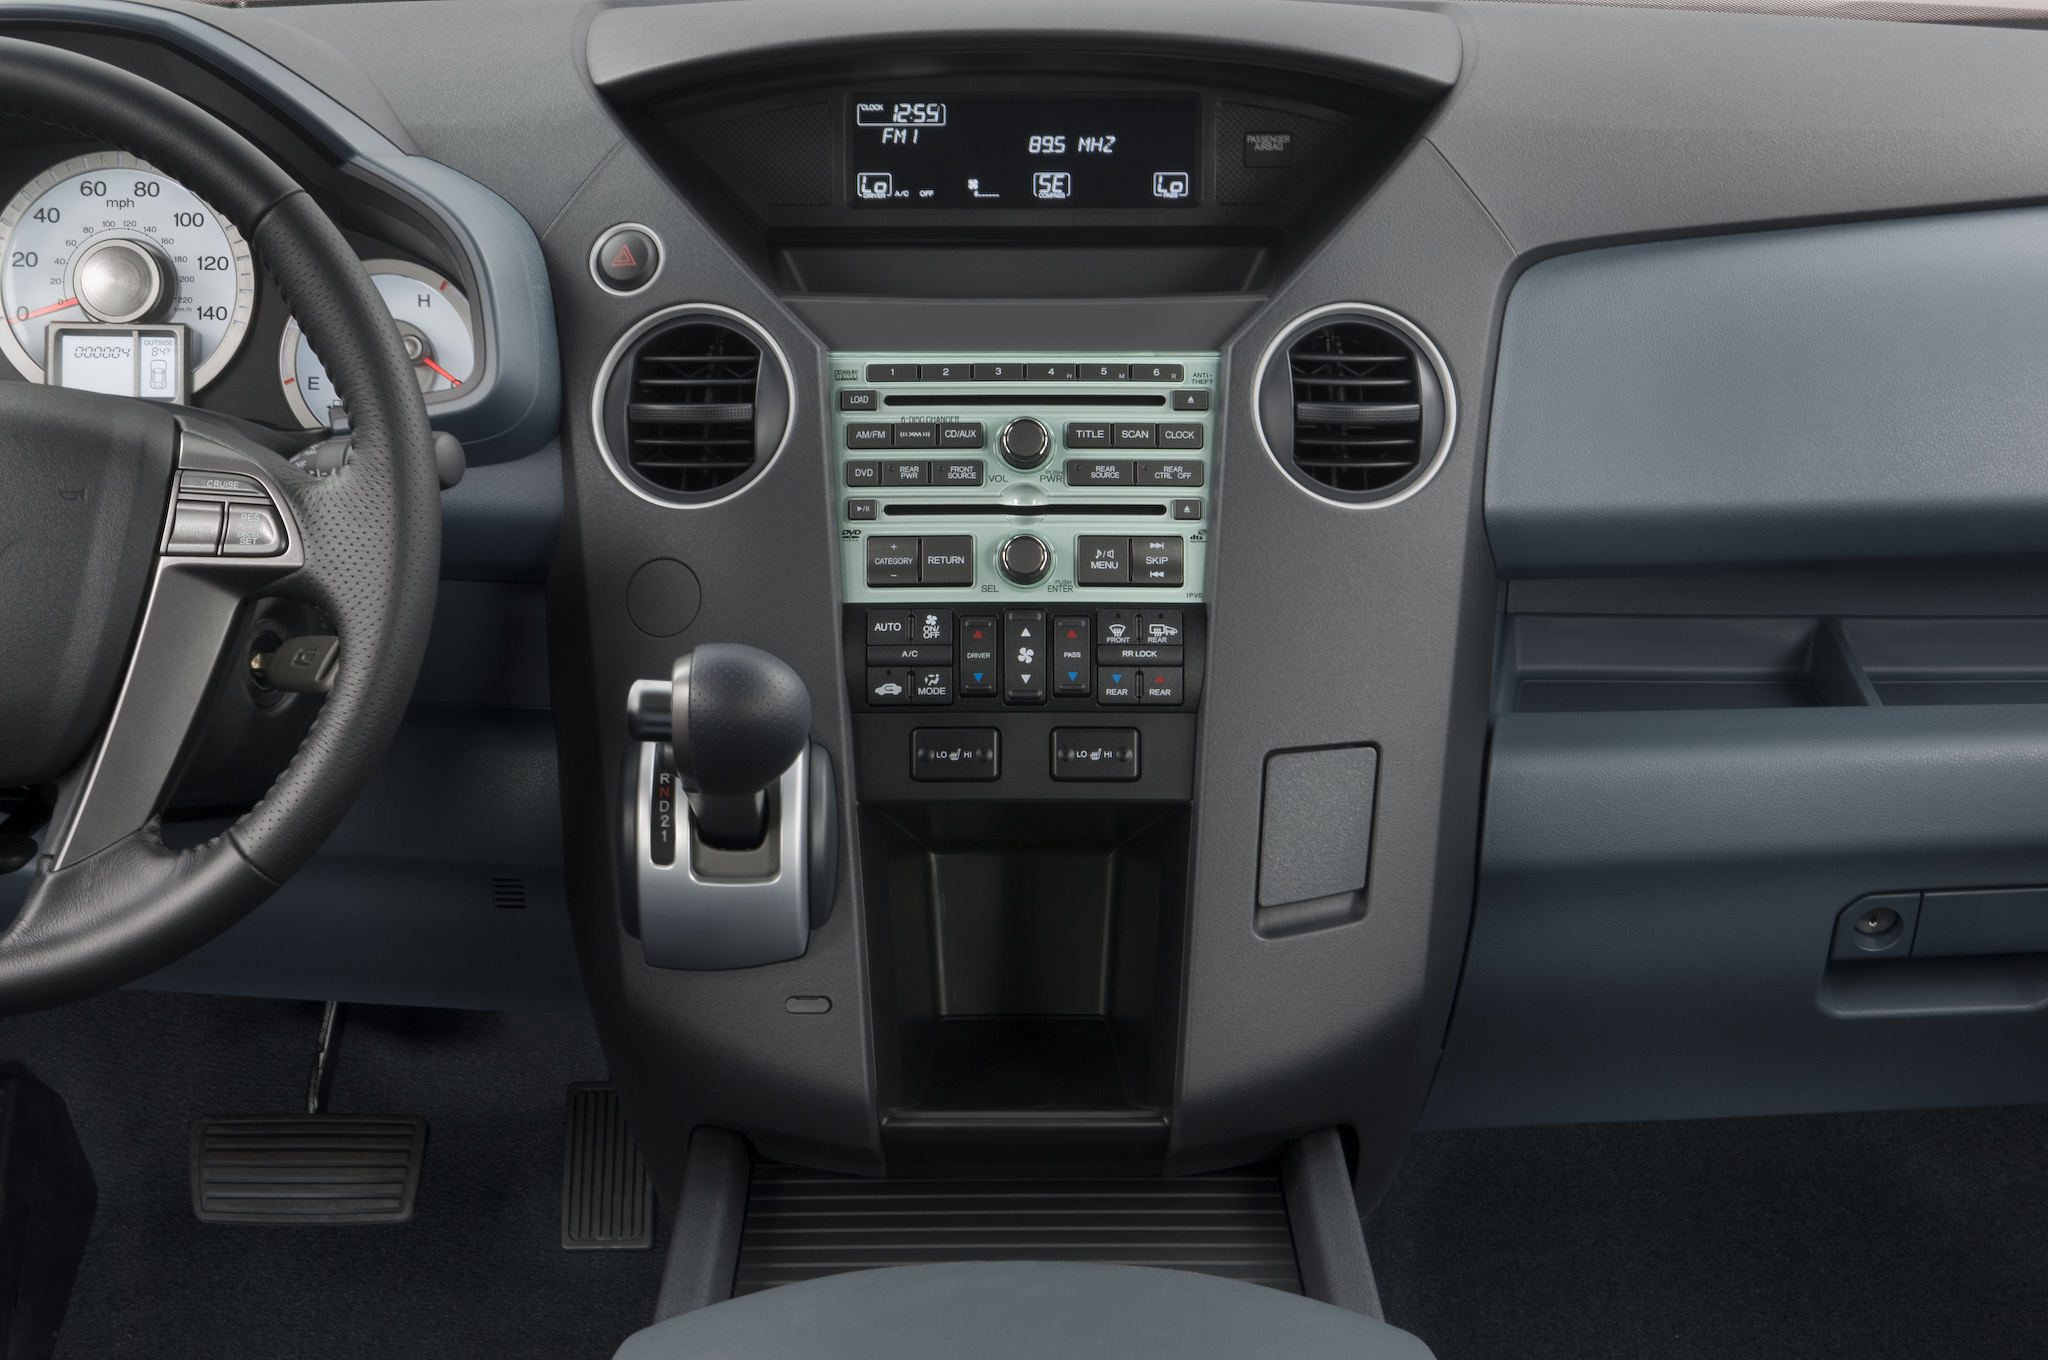 2010 Honda Pilot Interior Wiring Diagram 200